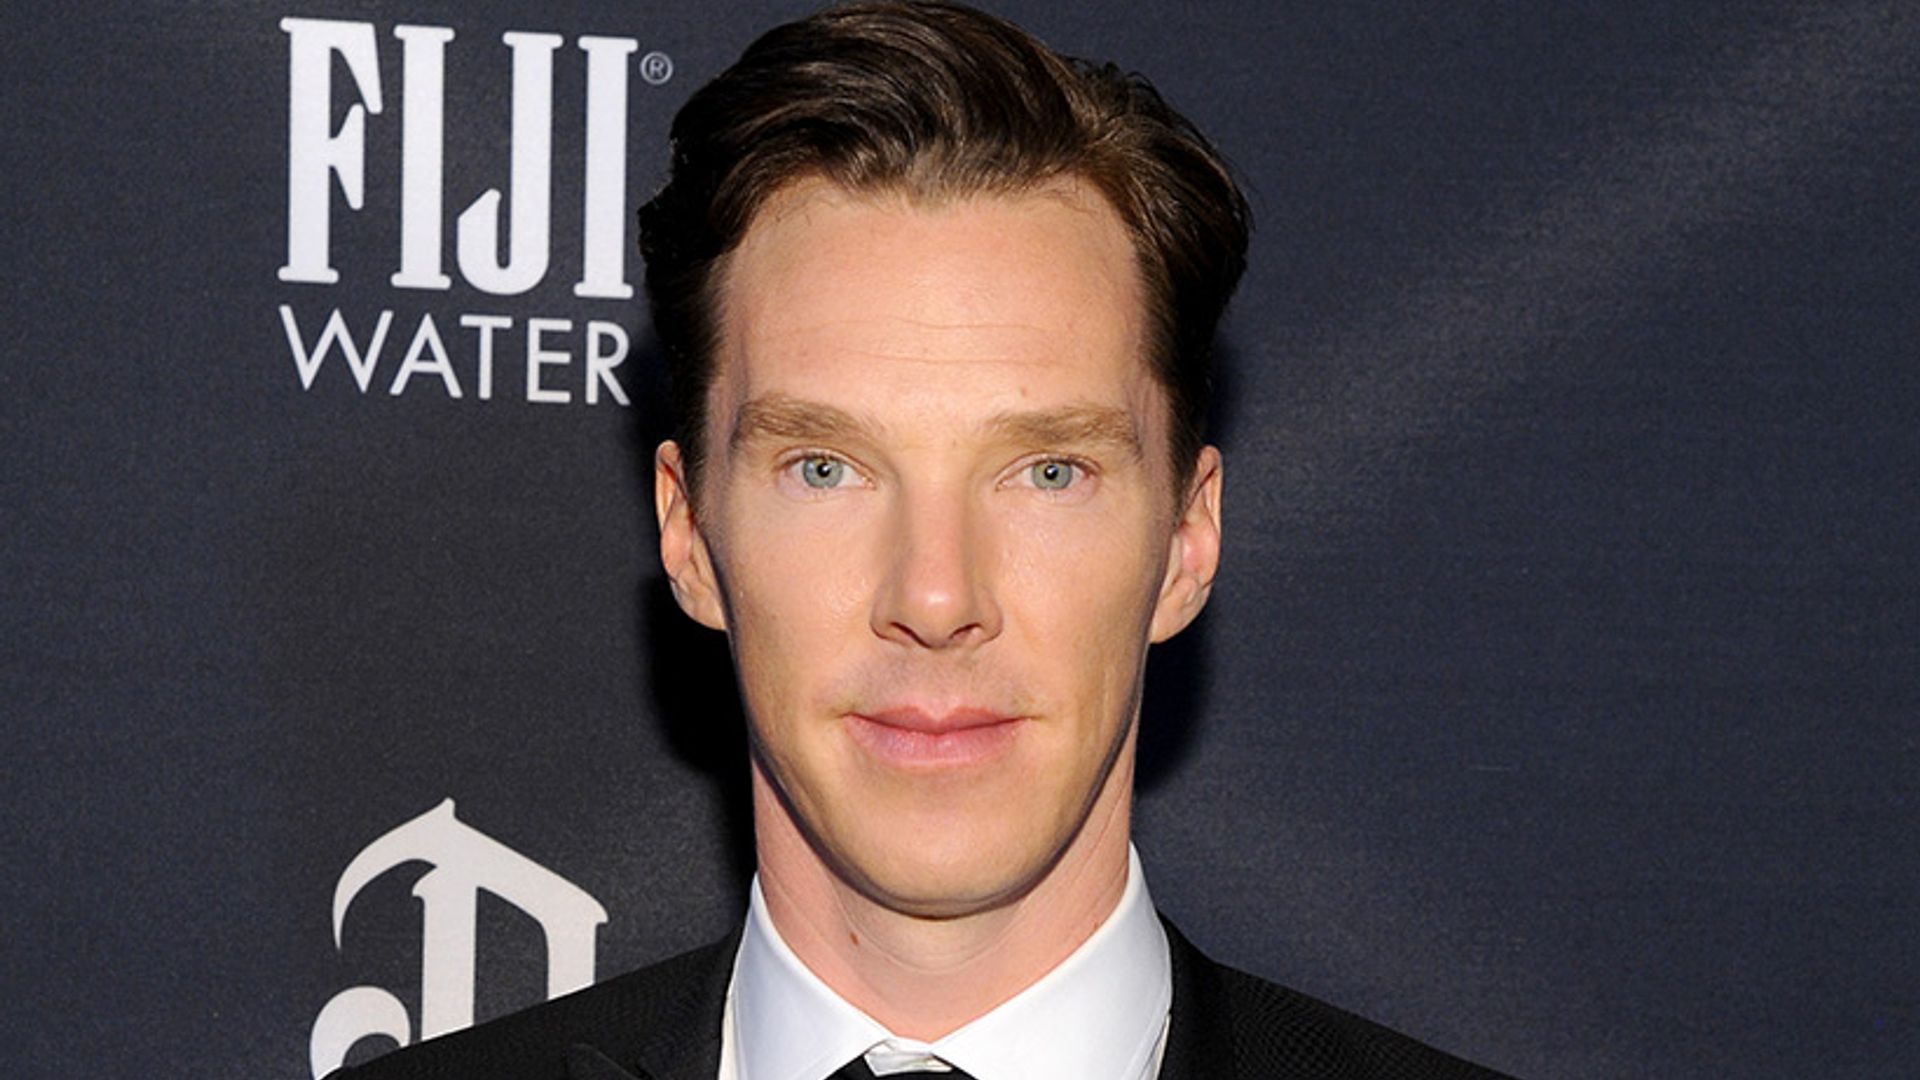 Benedict Cumberbatch returning to BBC - but not as Sherlock!